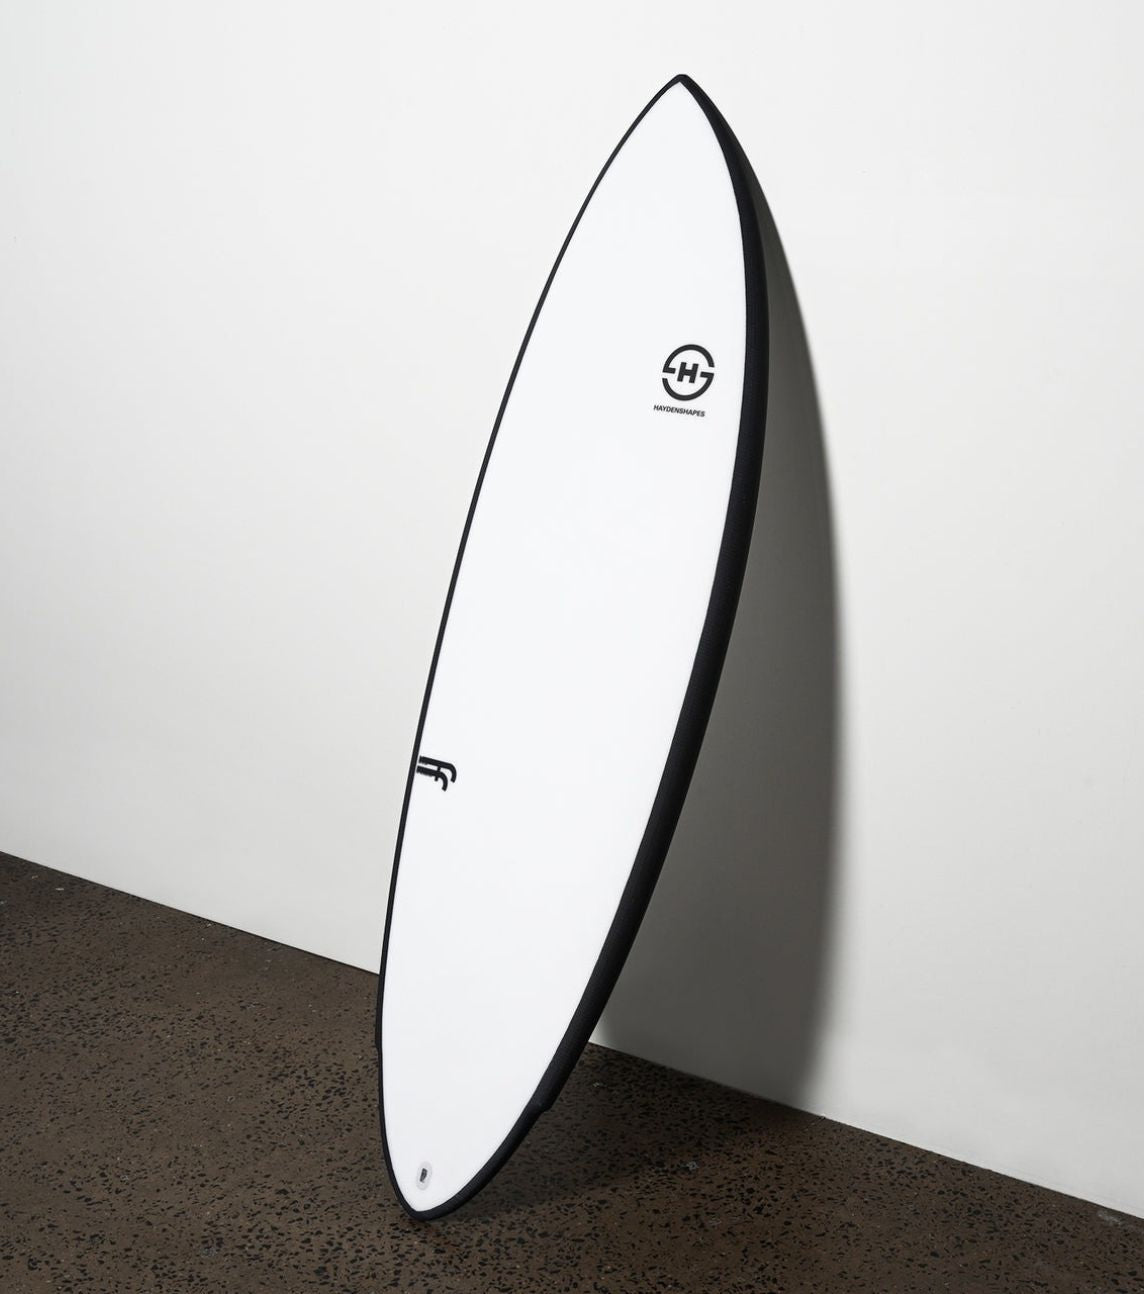 HaydenShapes Surfboard - HYPTO KRYPTO TWIN PIN - 5'9 at PUKAS